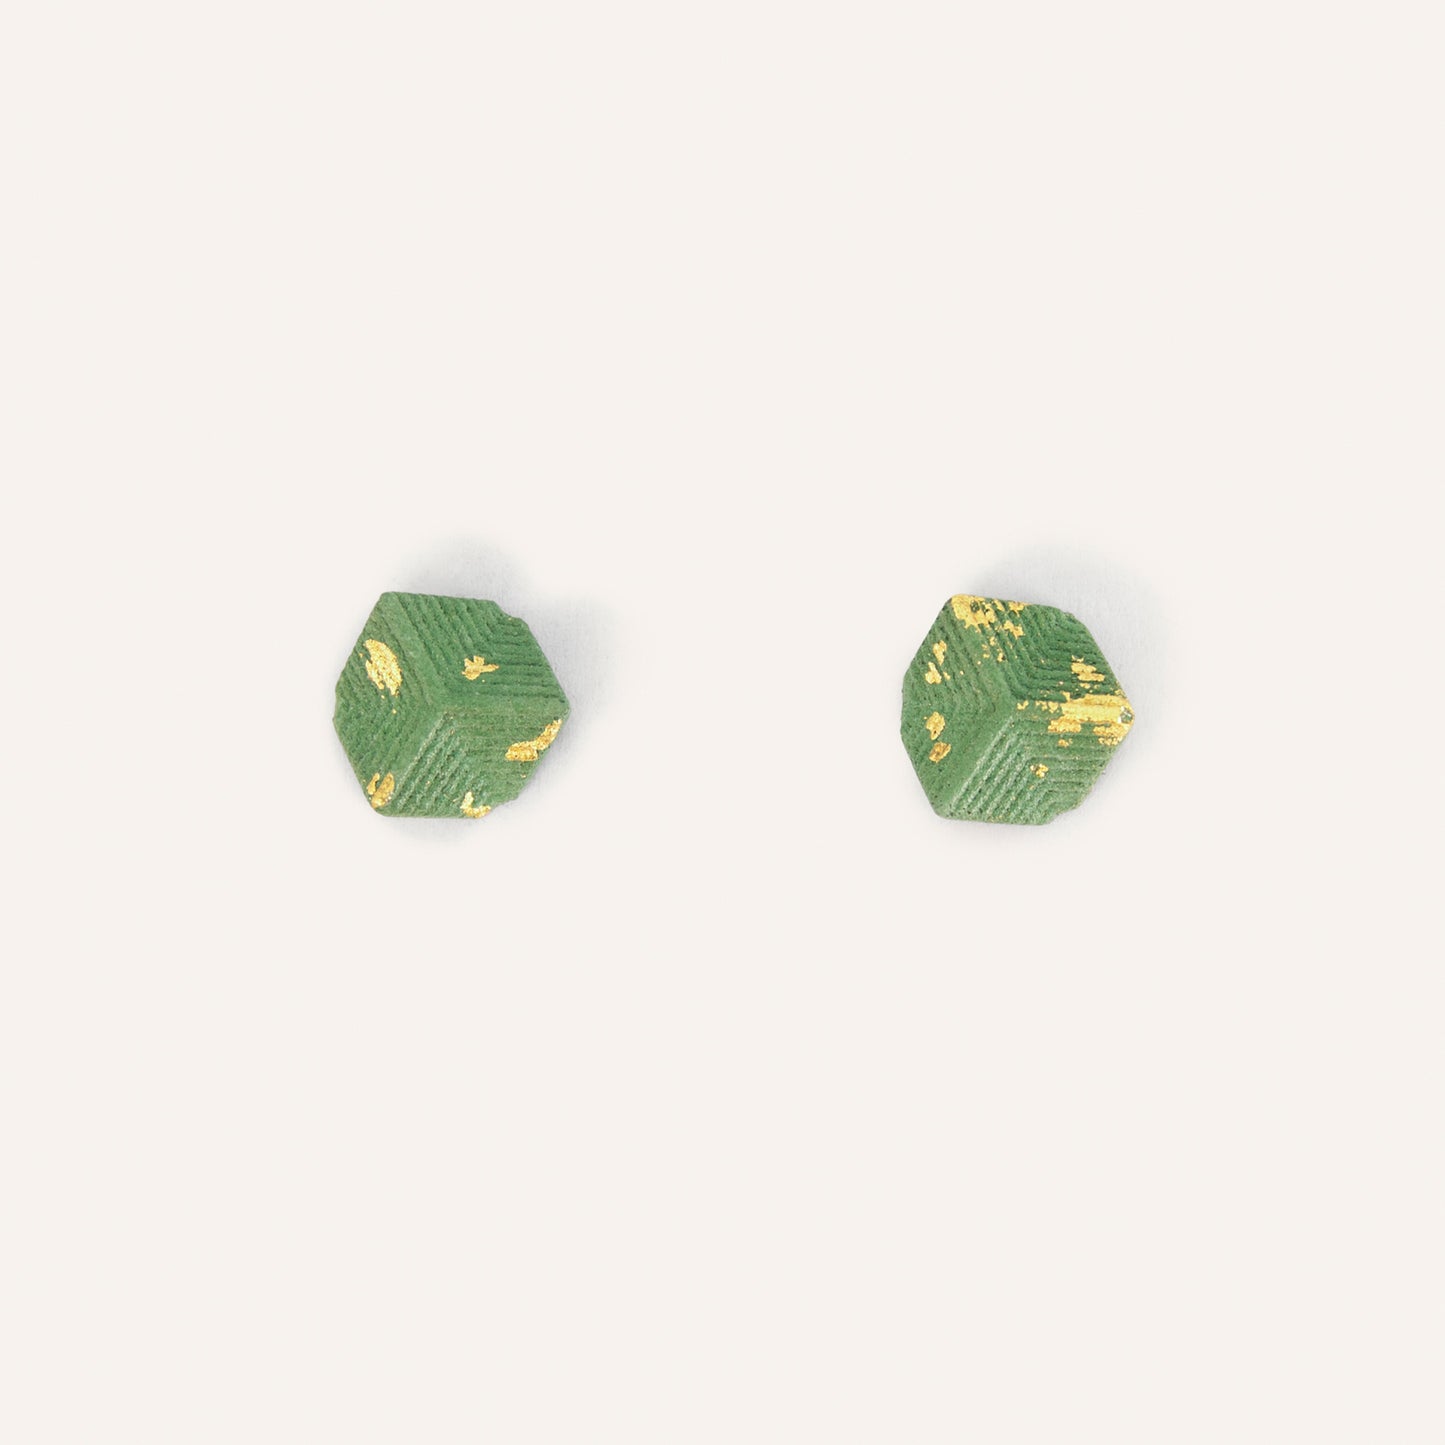 3D Brick Stud Earrings - Green/Gold